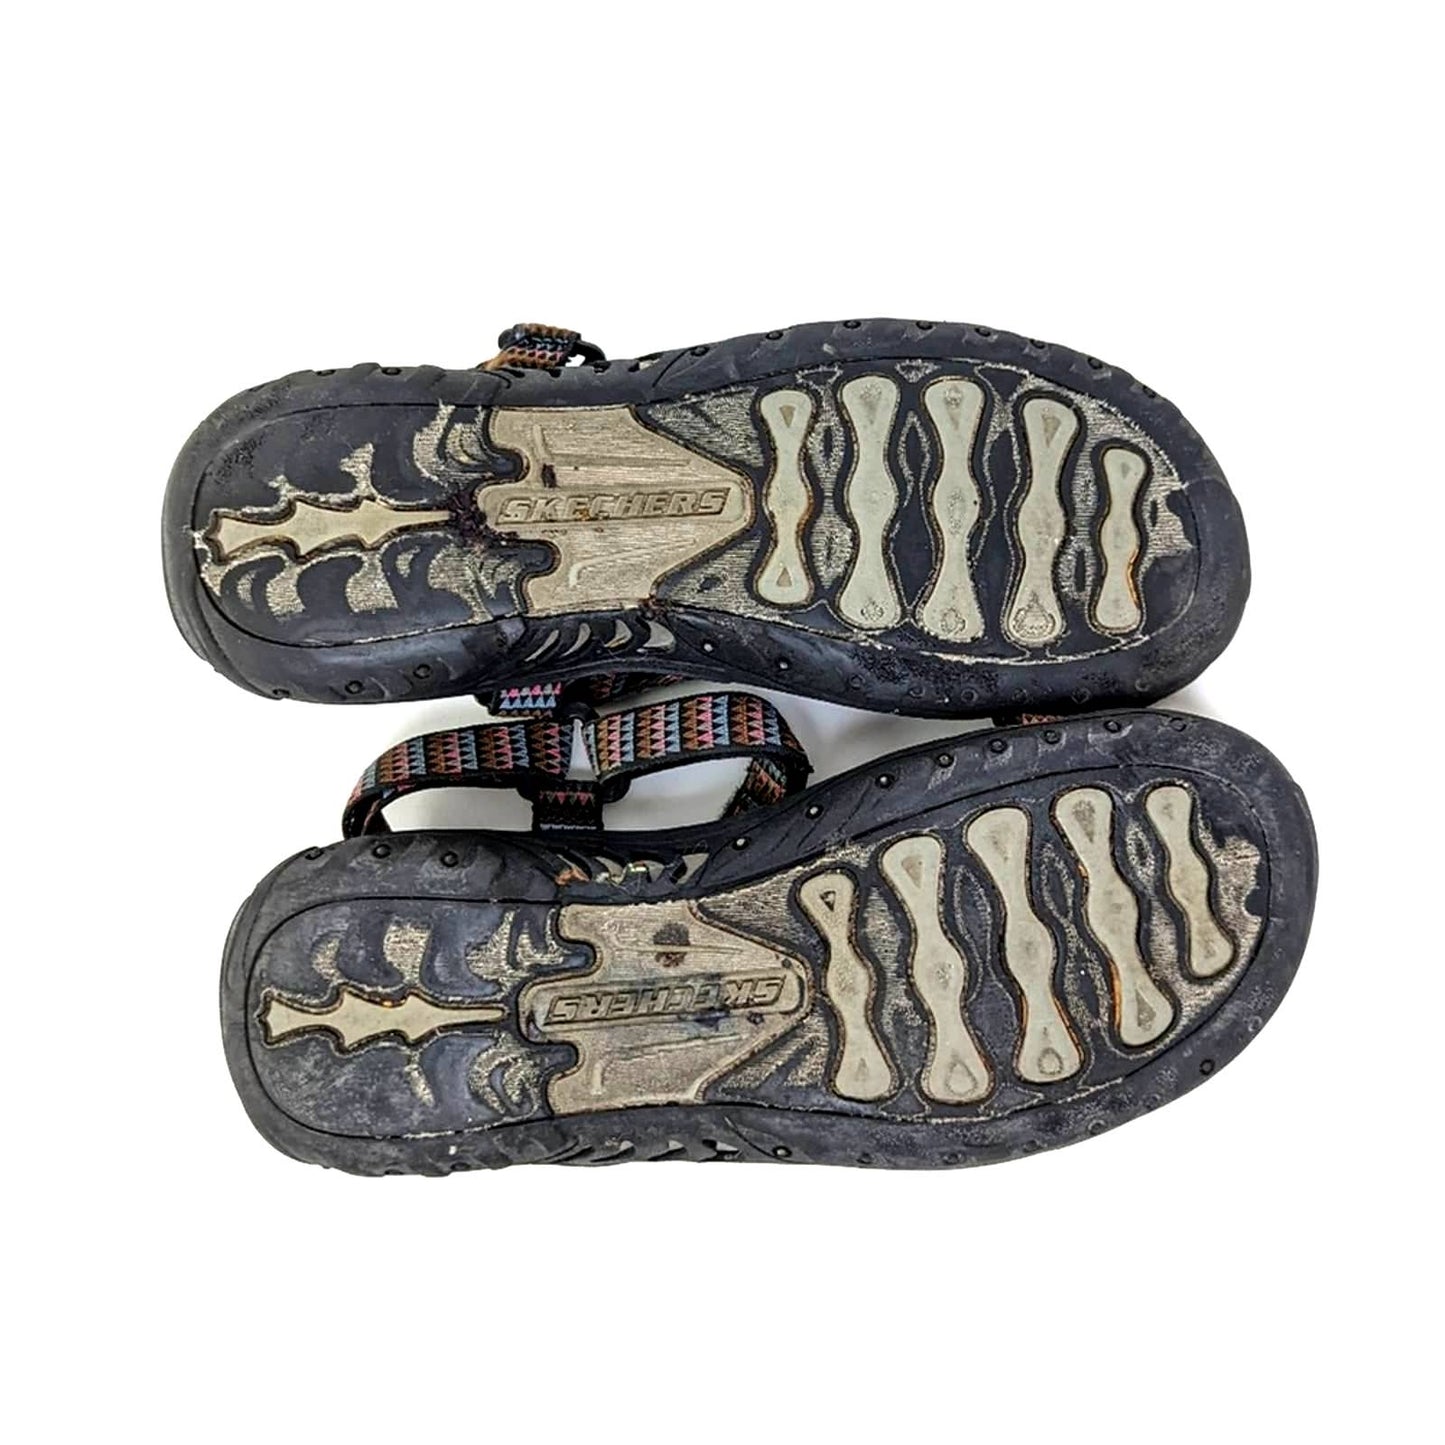 Skechers Outdoor Lifestyle Reggae Sandals - 8